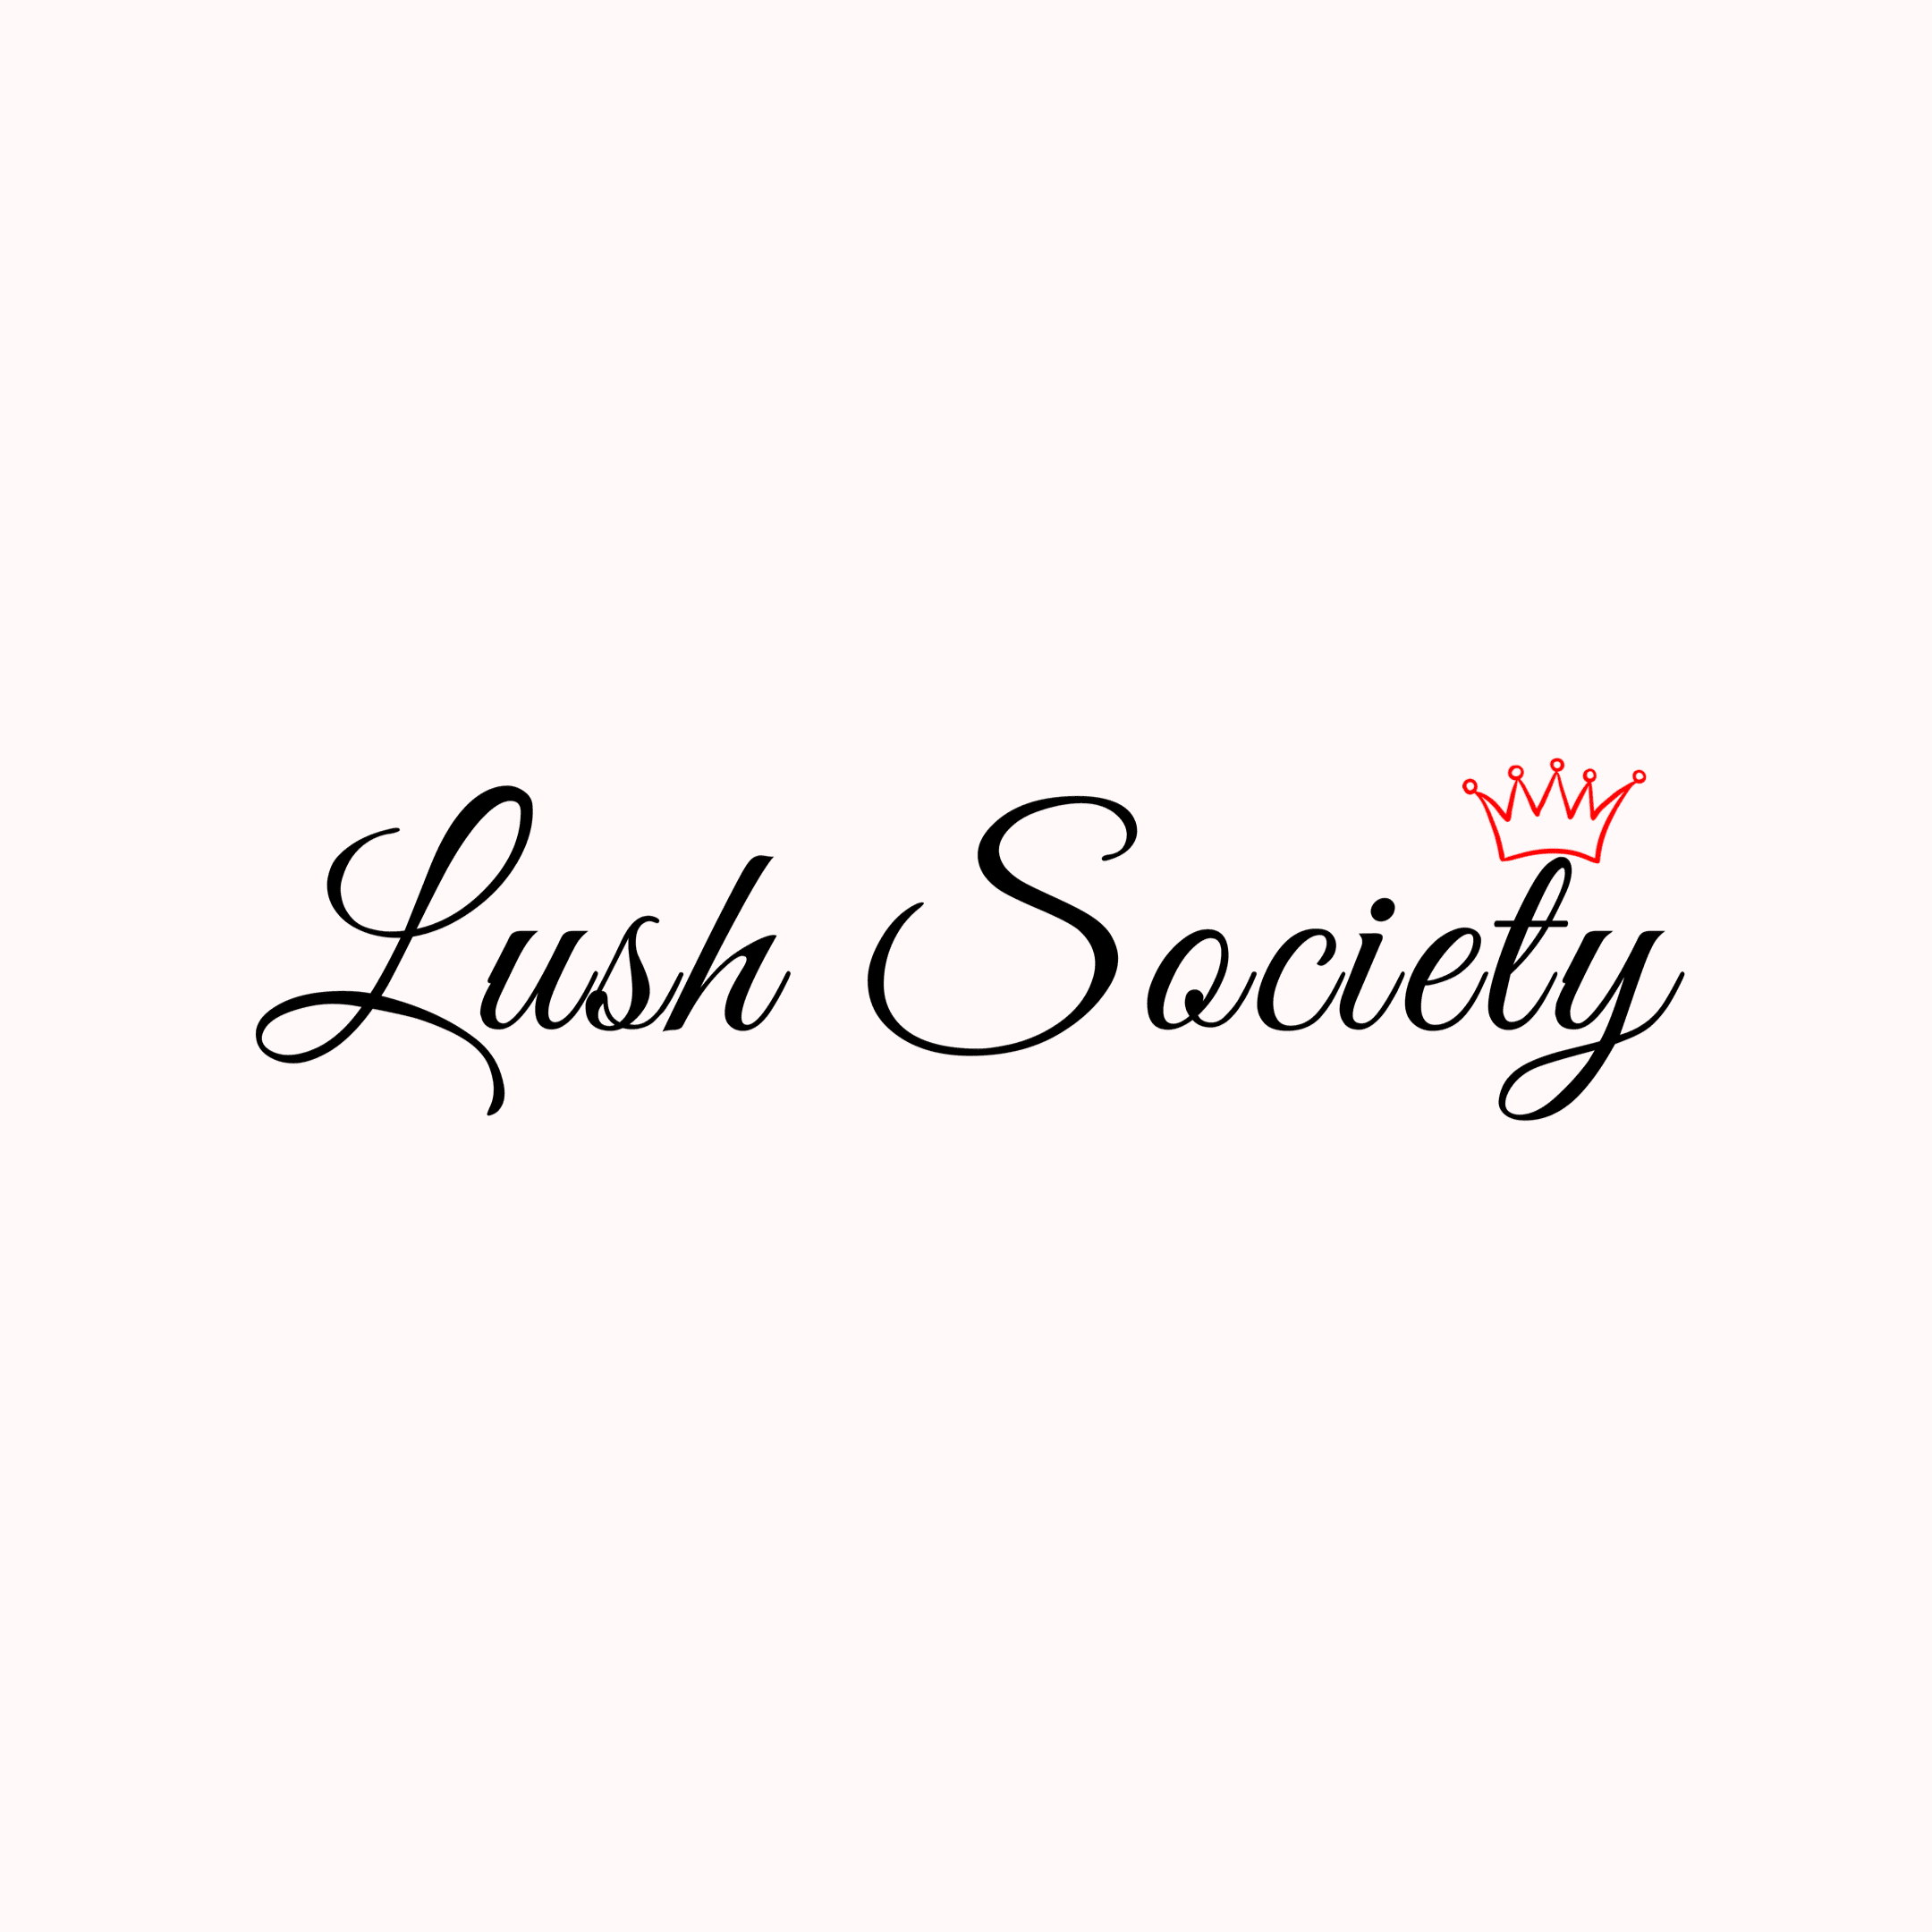 Lush Society